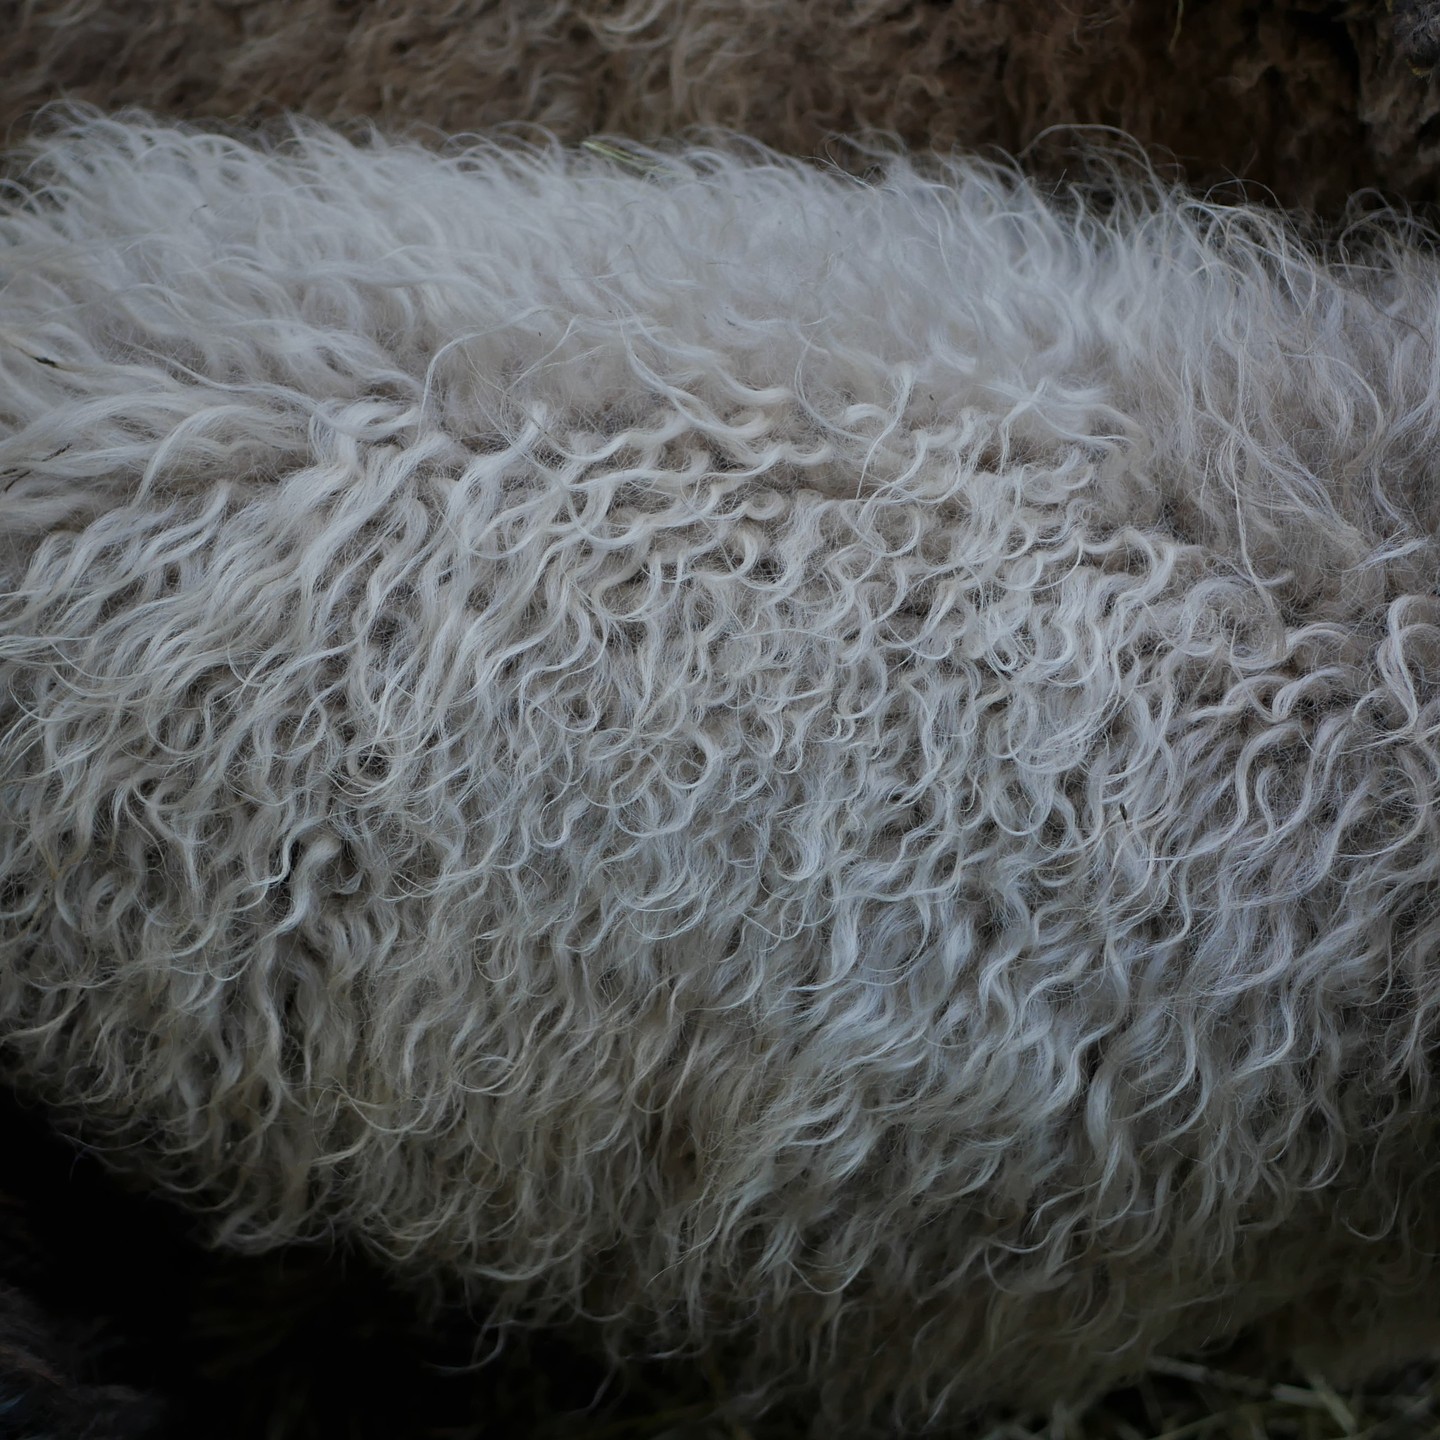 Alicia's beautiful fleece.

#ouessantsheep #ouessantwool #moutondouessant